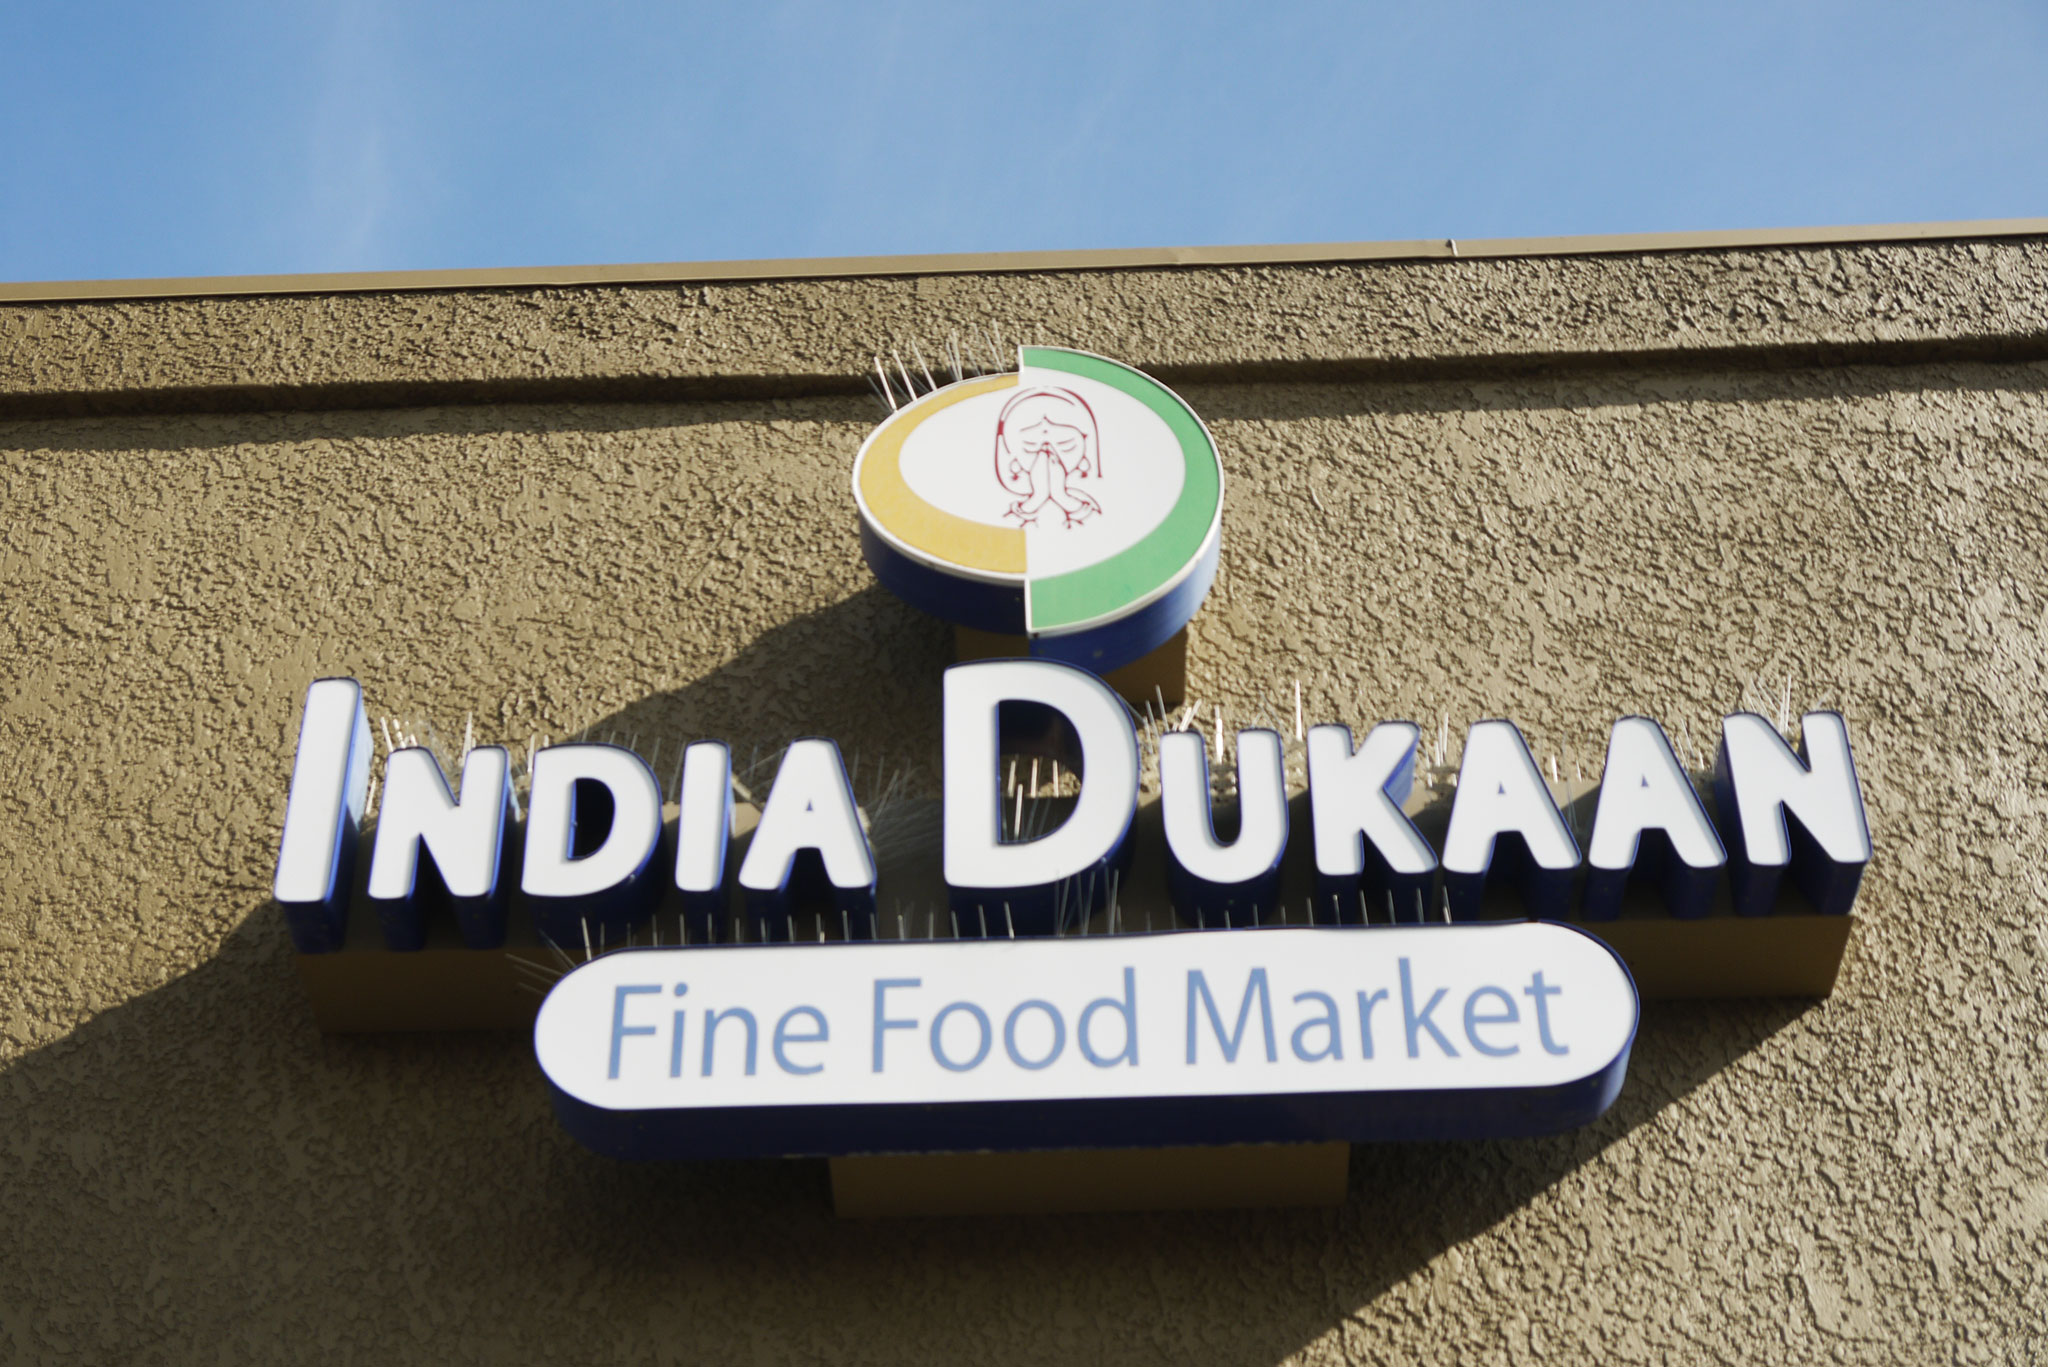 India Dukaan Fine Food Market